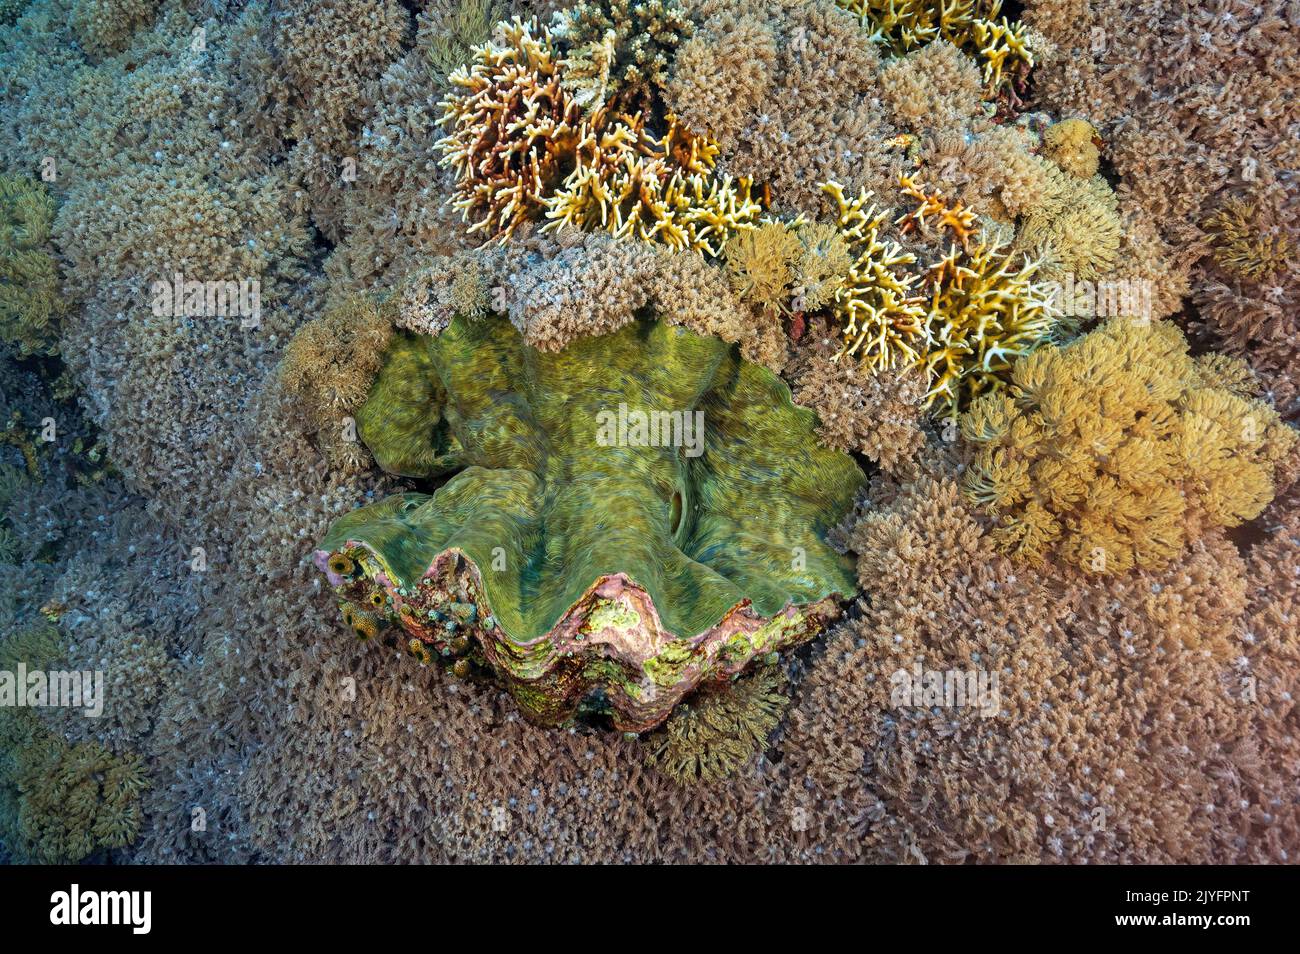 Almeja gigante, Tridacna gigas, rodeada de corales blandos, Clavularia viridis, Raja Ampat Indonesia. Foto de stock